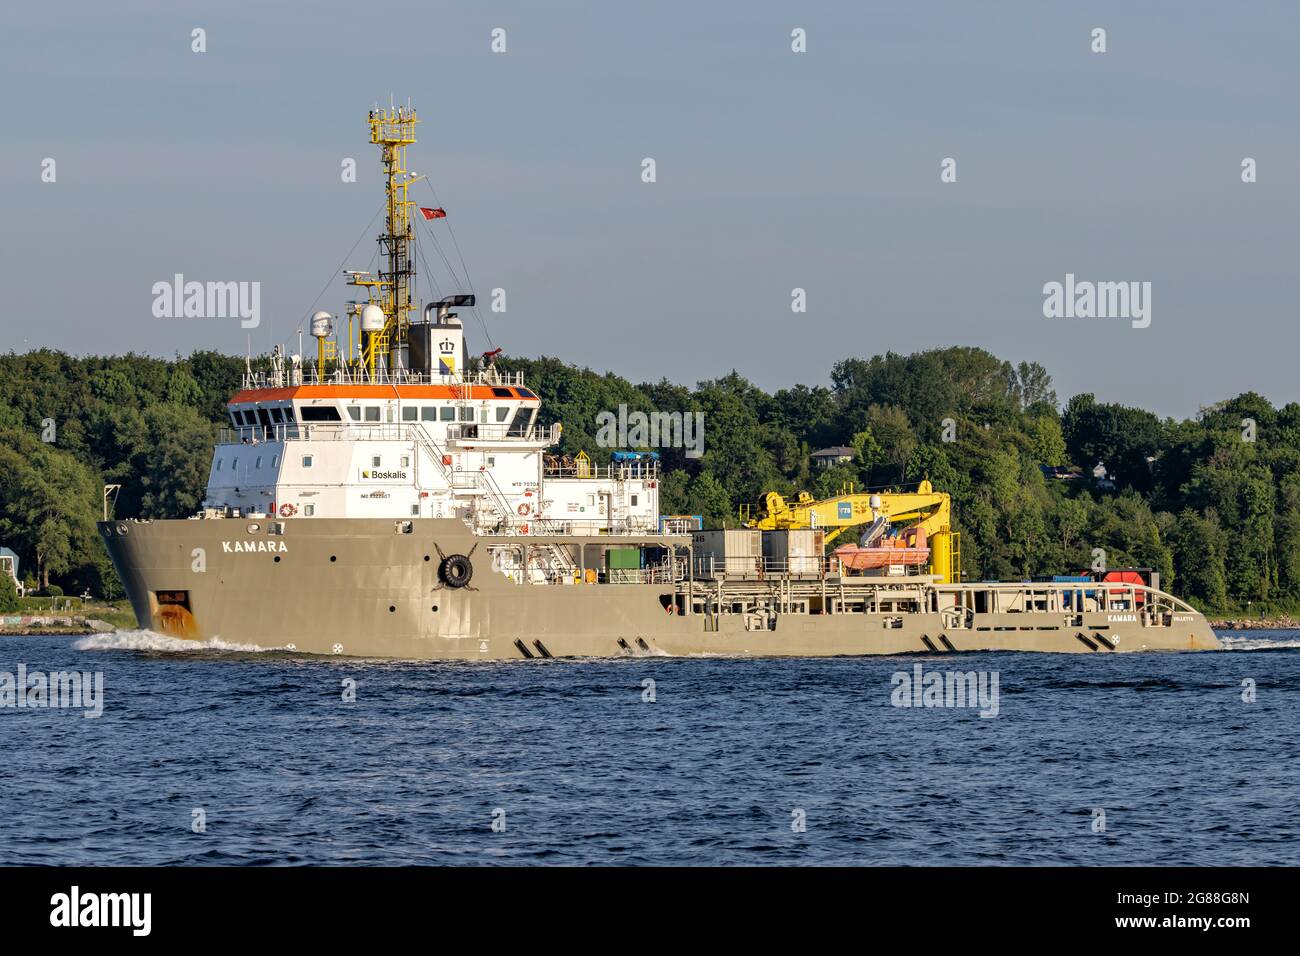 Boskalis anchor handling tug supply vessel (AHTS)  KAMARA in the Kiel Fjord Stock Photo